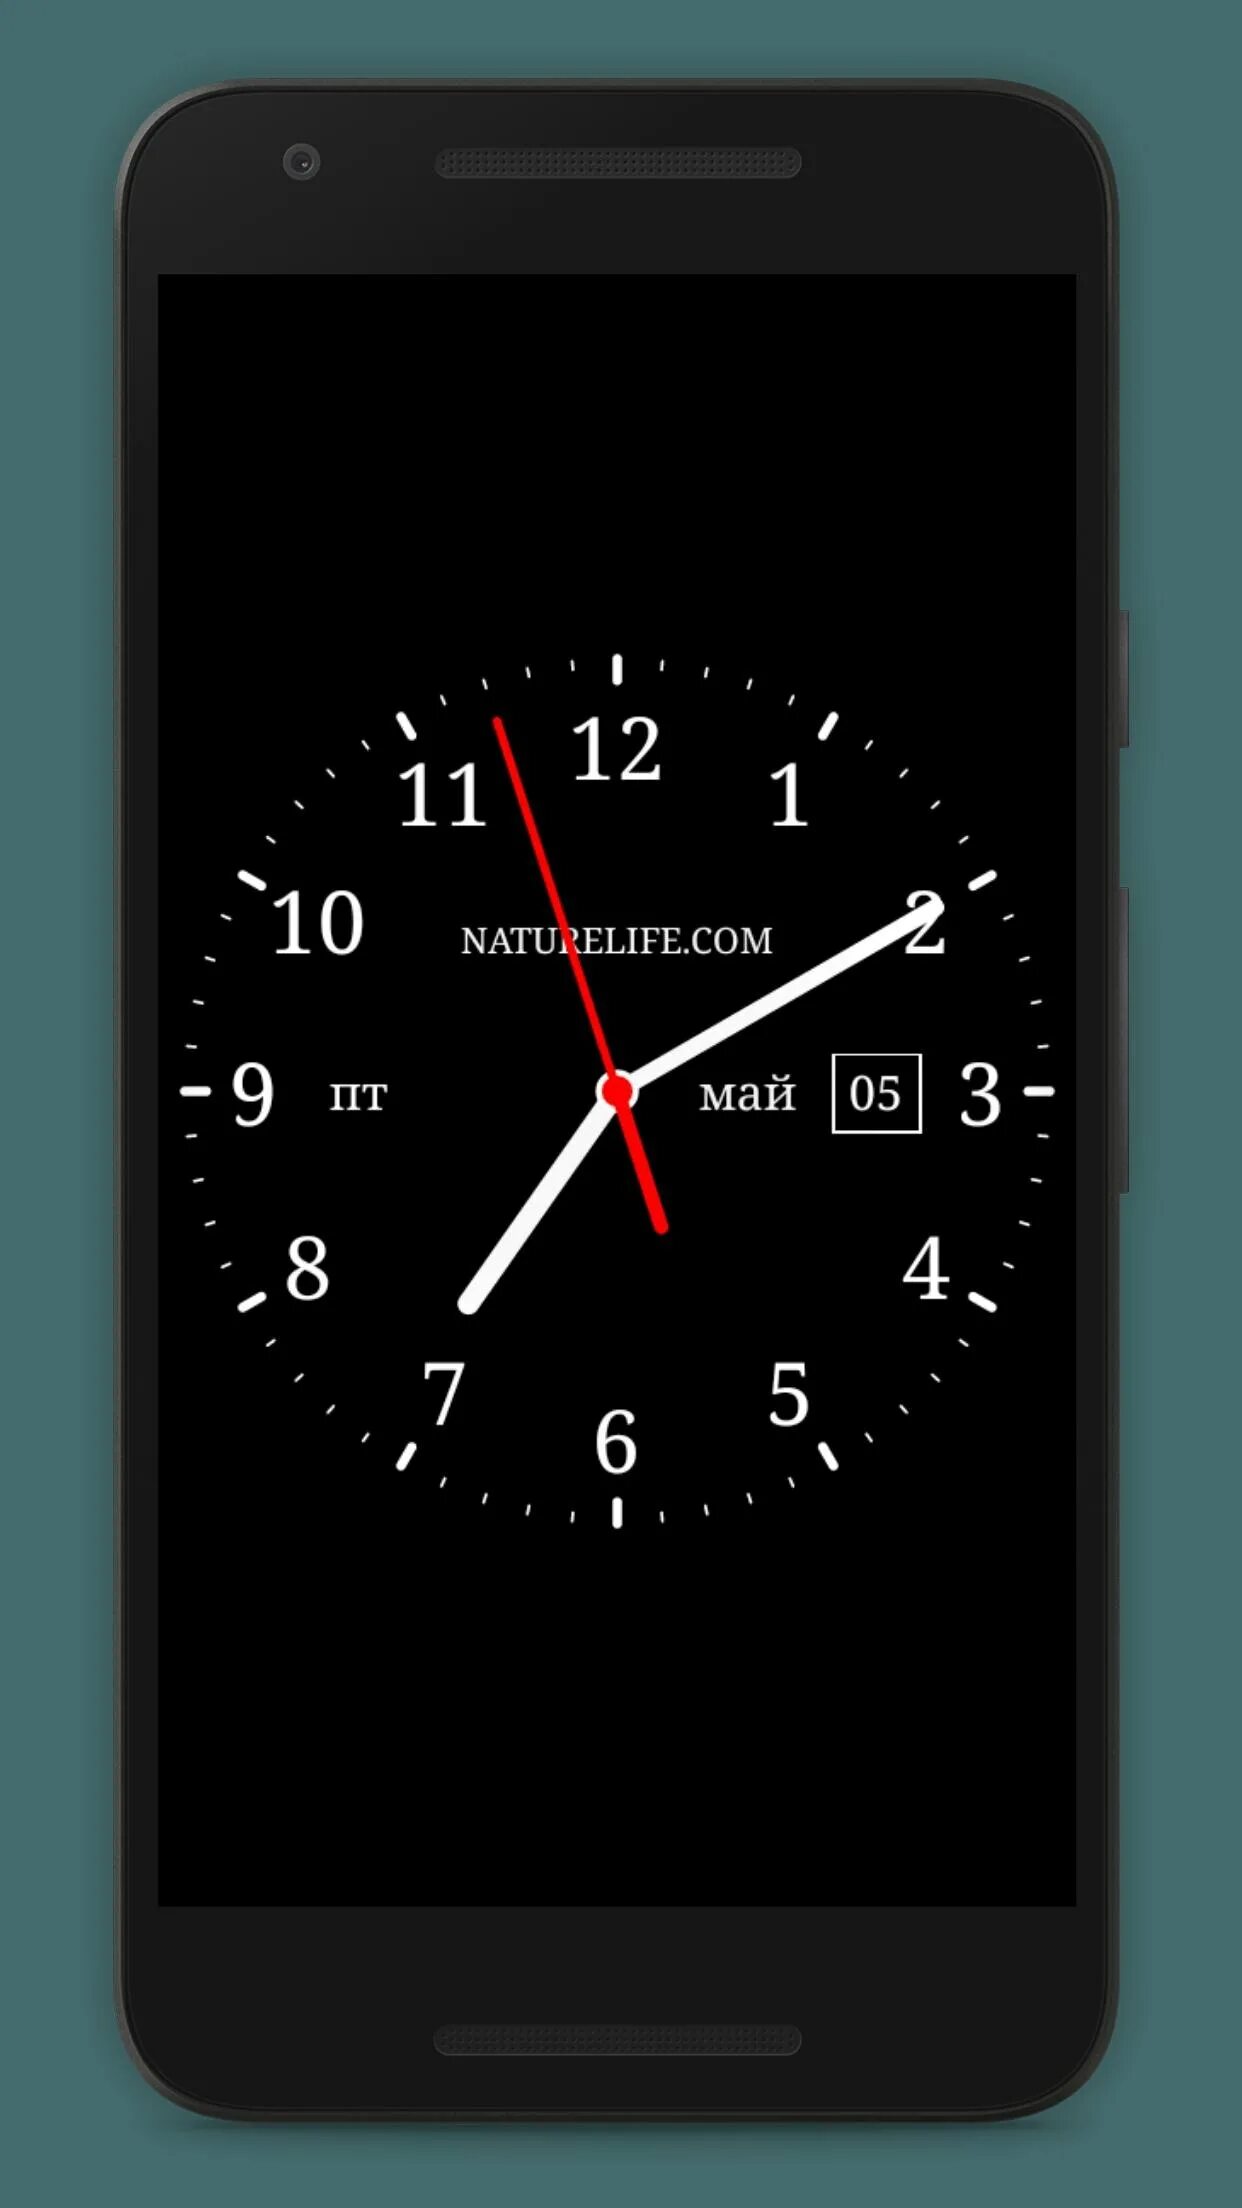 Аналоговые часы для андроид 4.2.2. Аналоговые часы для андроид Samsung a 260. Аналоговые часы для андроид. Часы на экран смартфона.